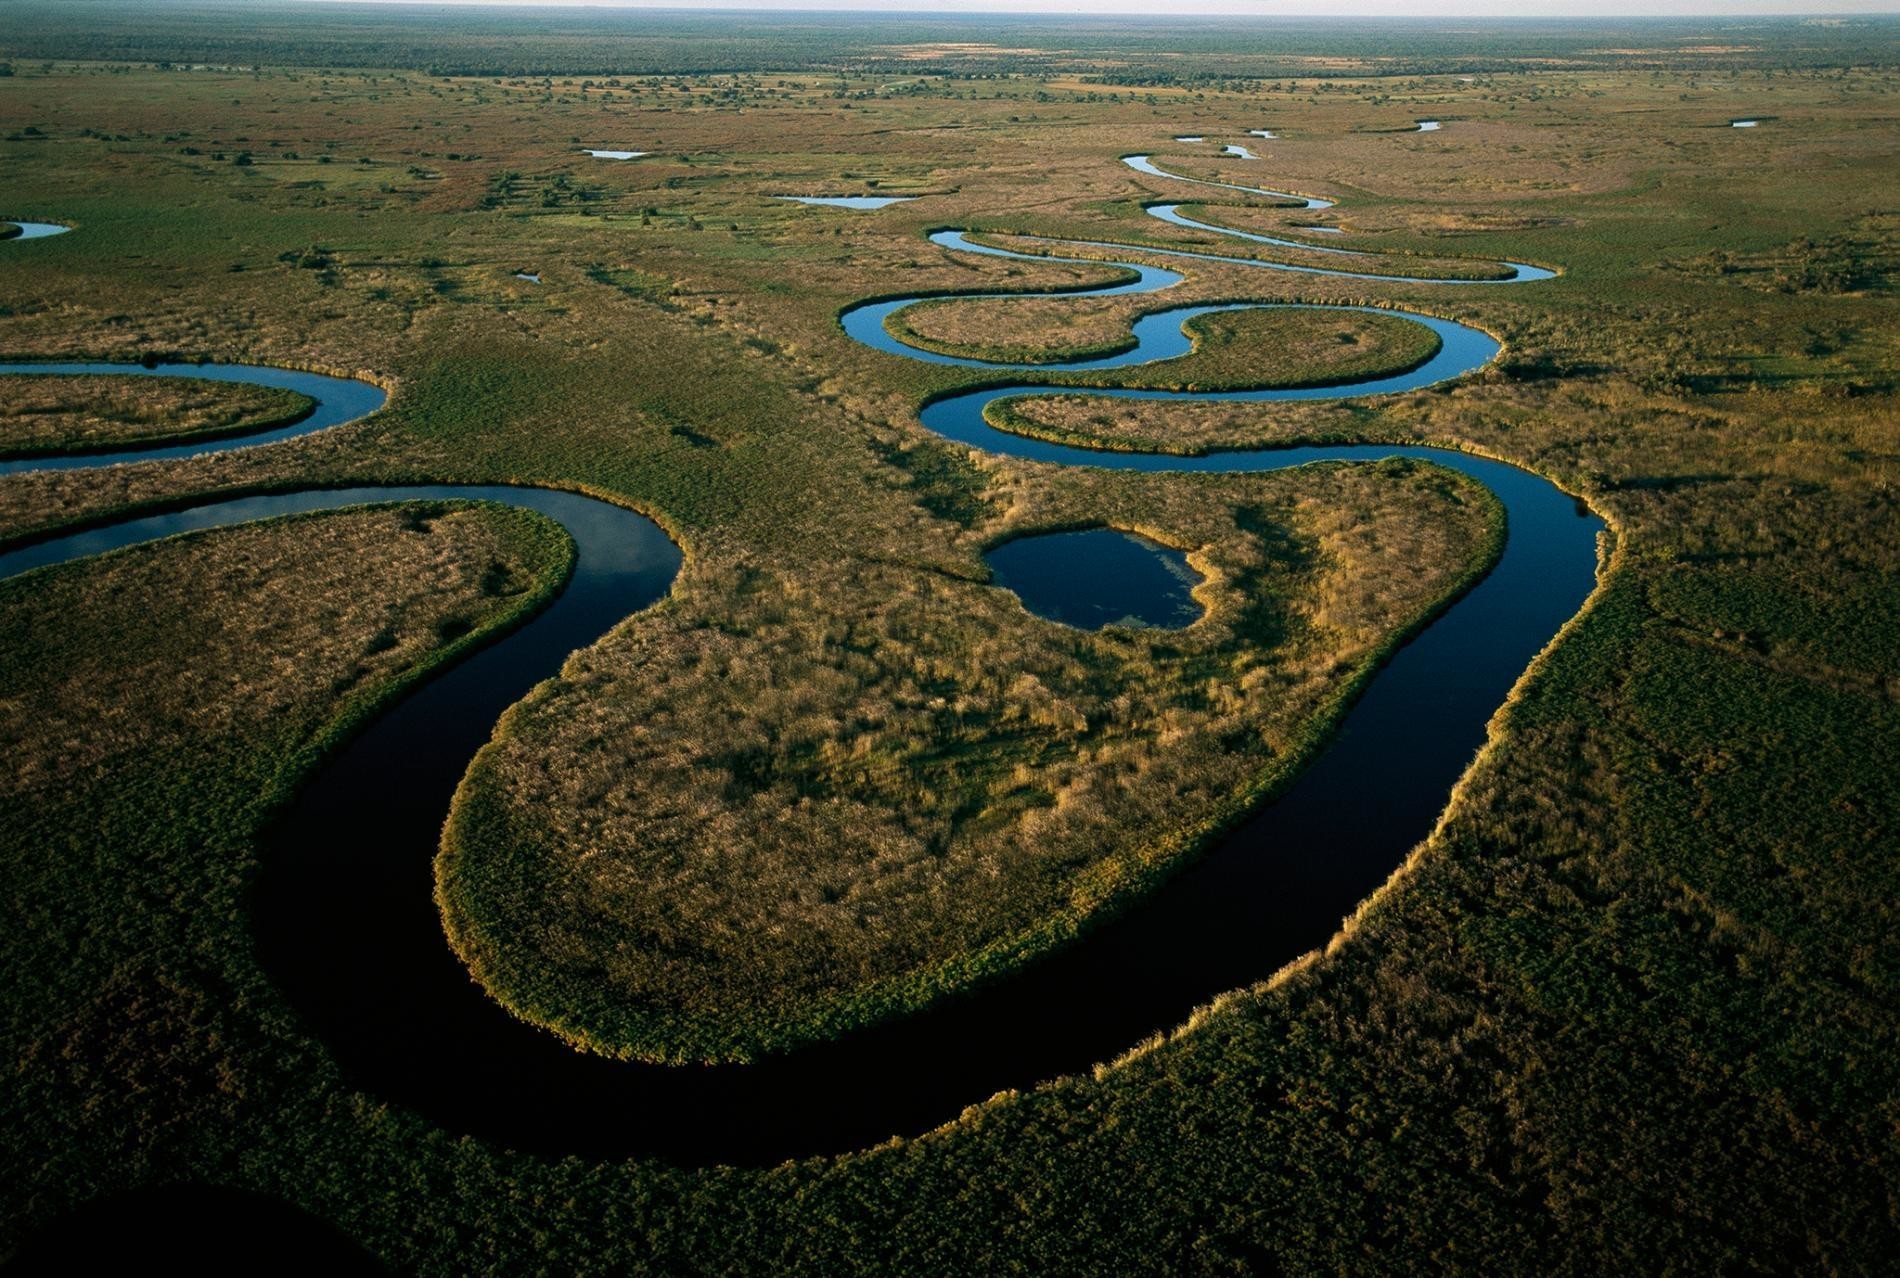 Впало в озеро. Река Окаванго, Ботсвана. Дельта реки Окаванго. Дельта реки Окаванго в Ботсване. Дельта реки Окаванго Африка.